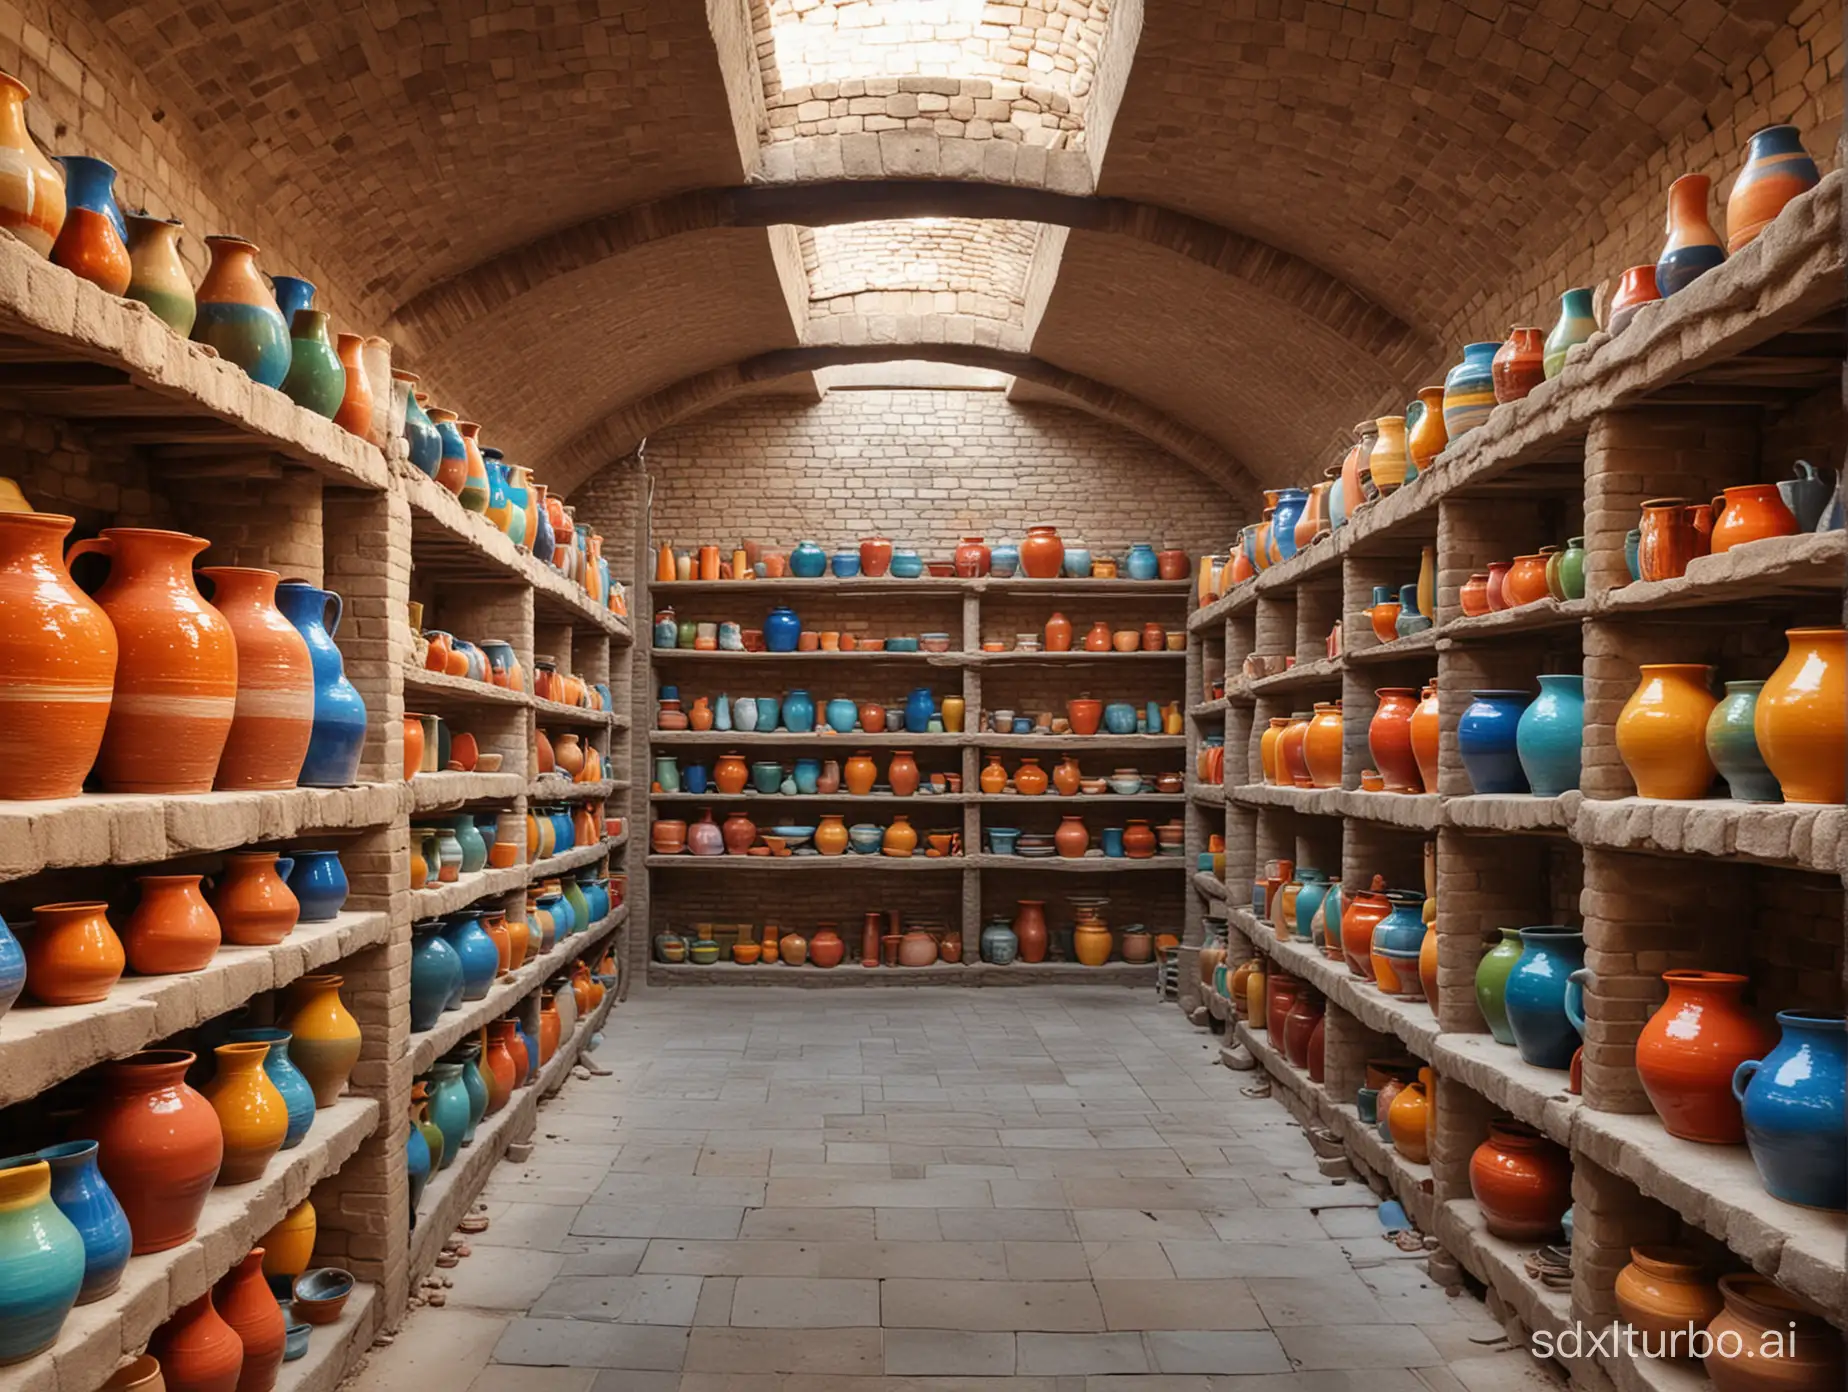 Big pottery kiln with colorful glazed ceramics inside realistic